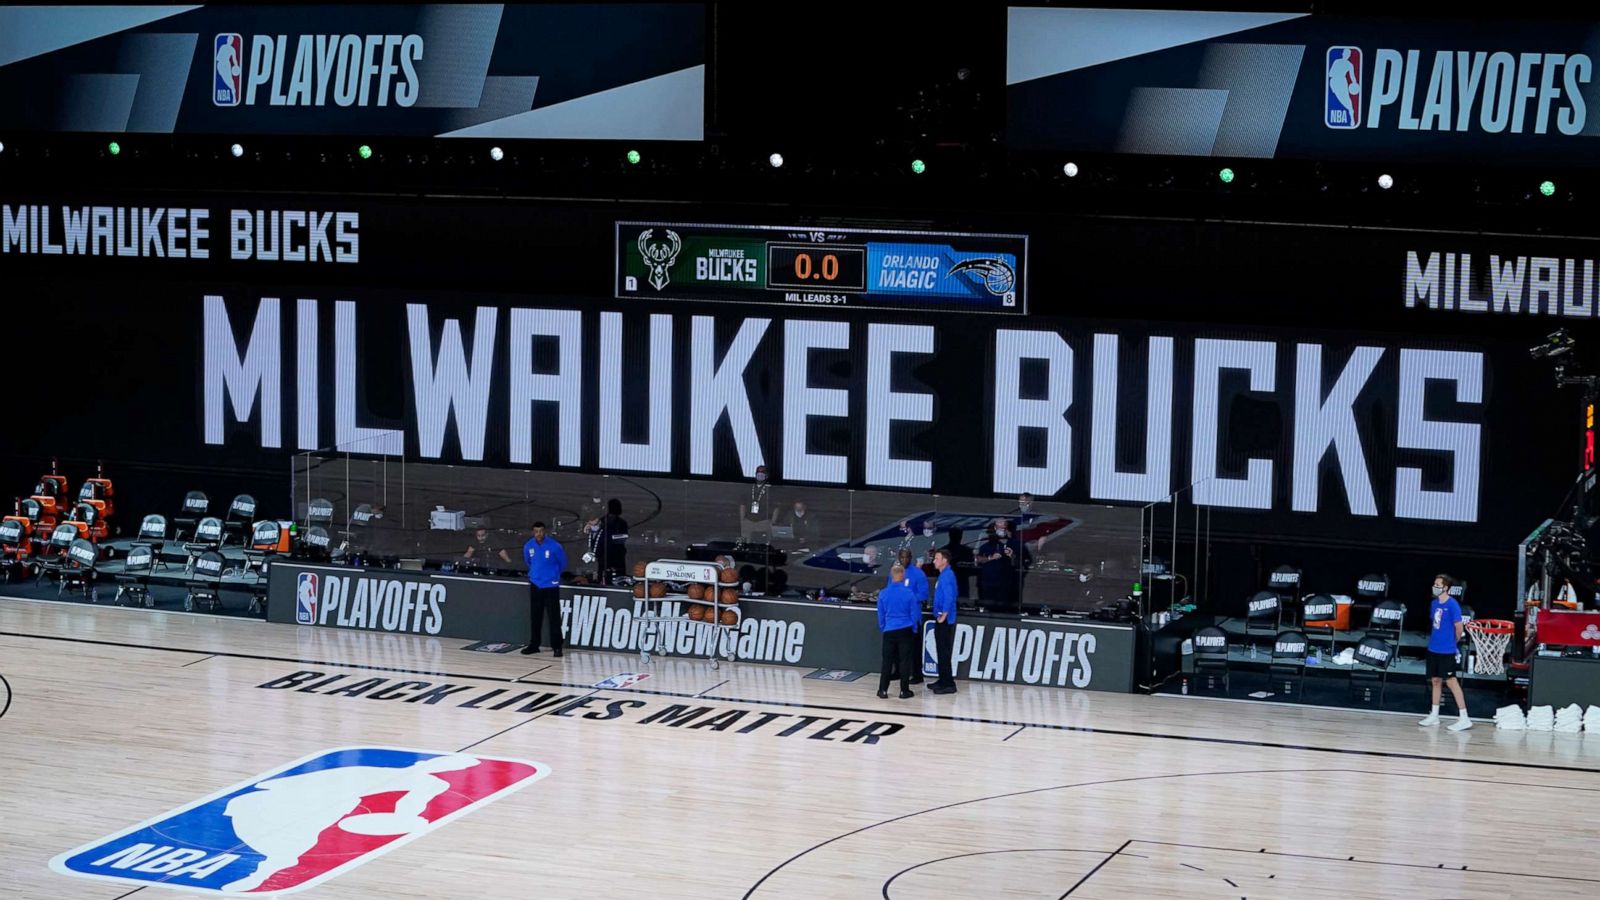 NBA, WNBA postpone all Wednesday games after players refused to play over Jacob Blake shooting